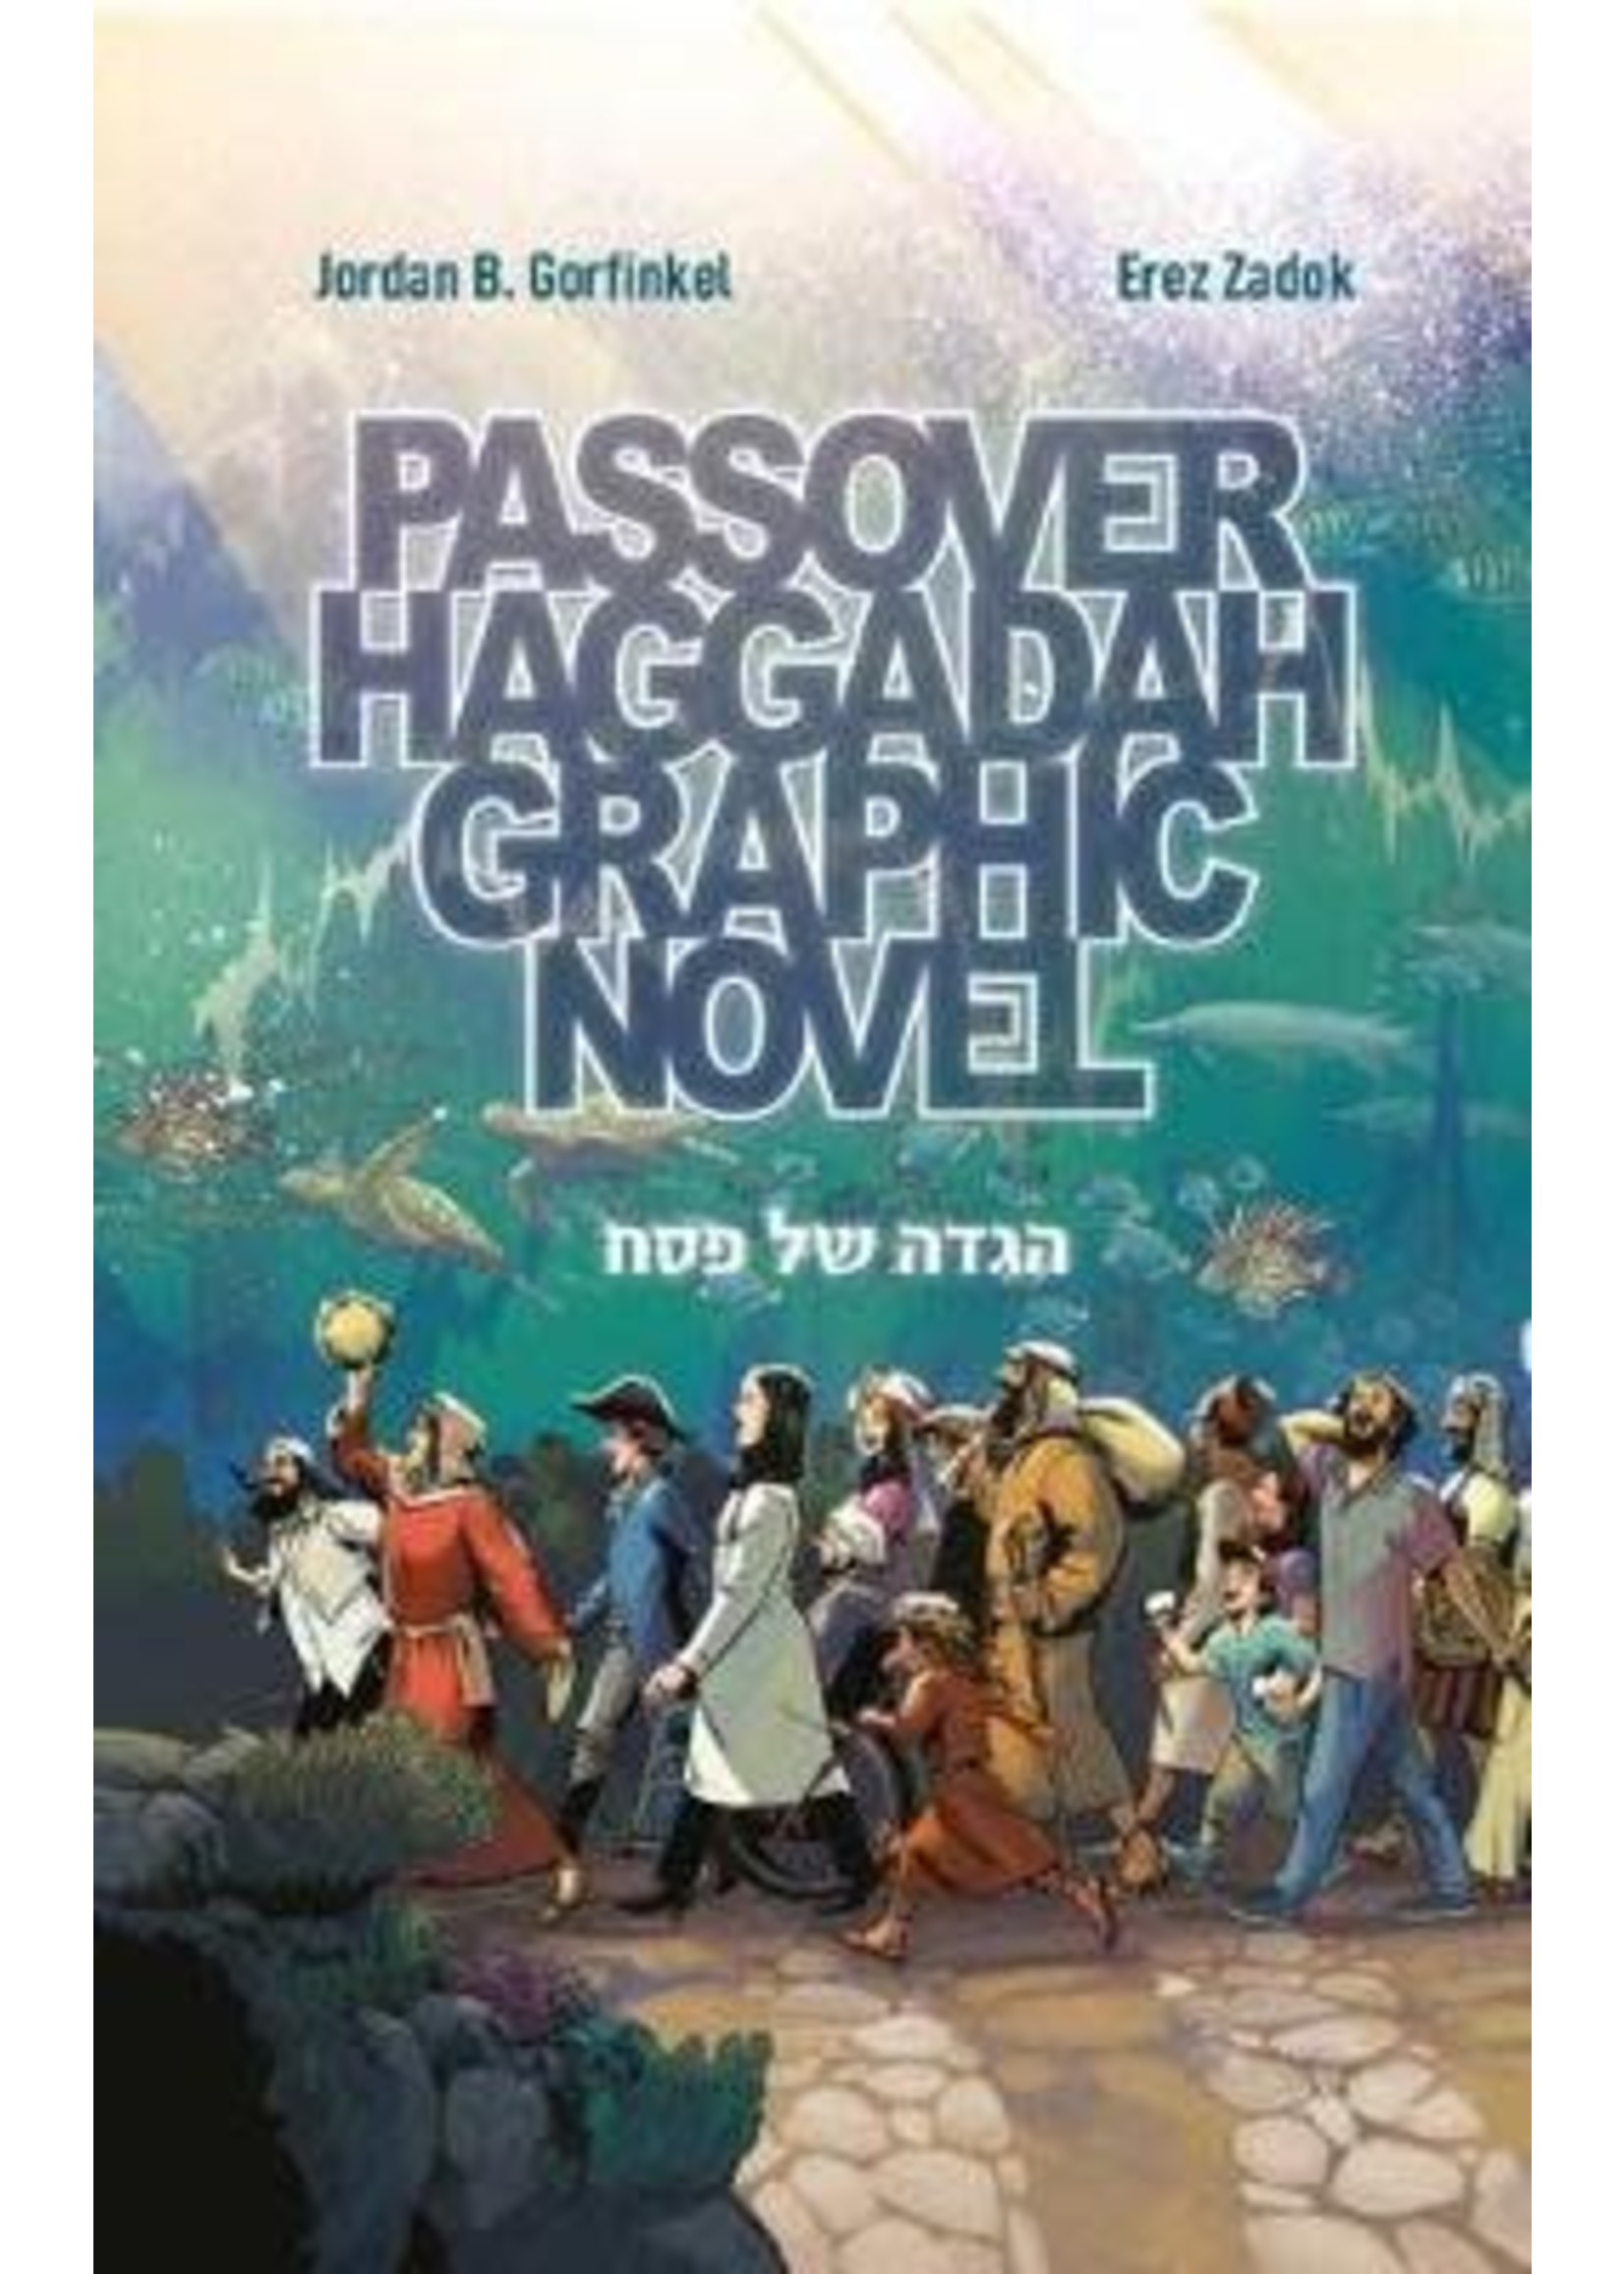 PASSOVER HAGGADAH GRAPHIC NOVEL - COMICS